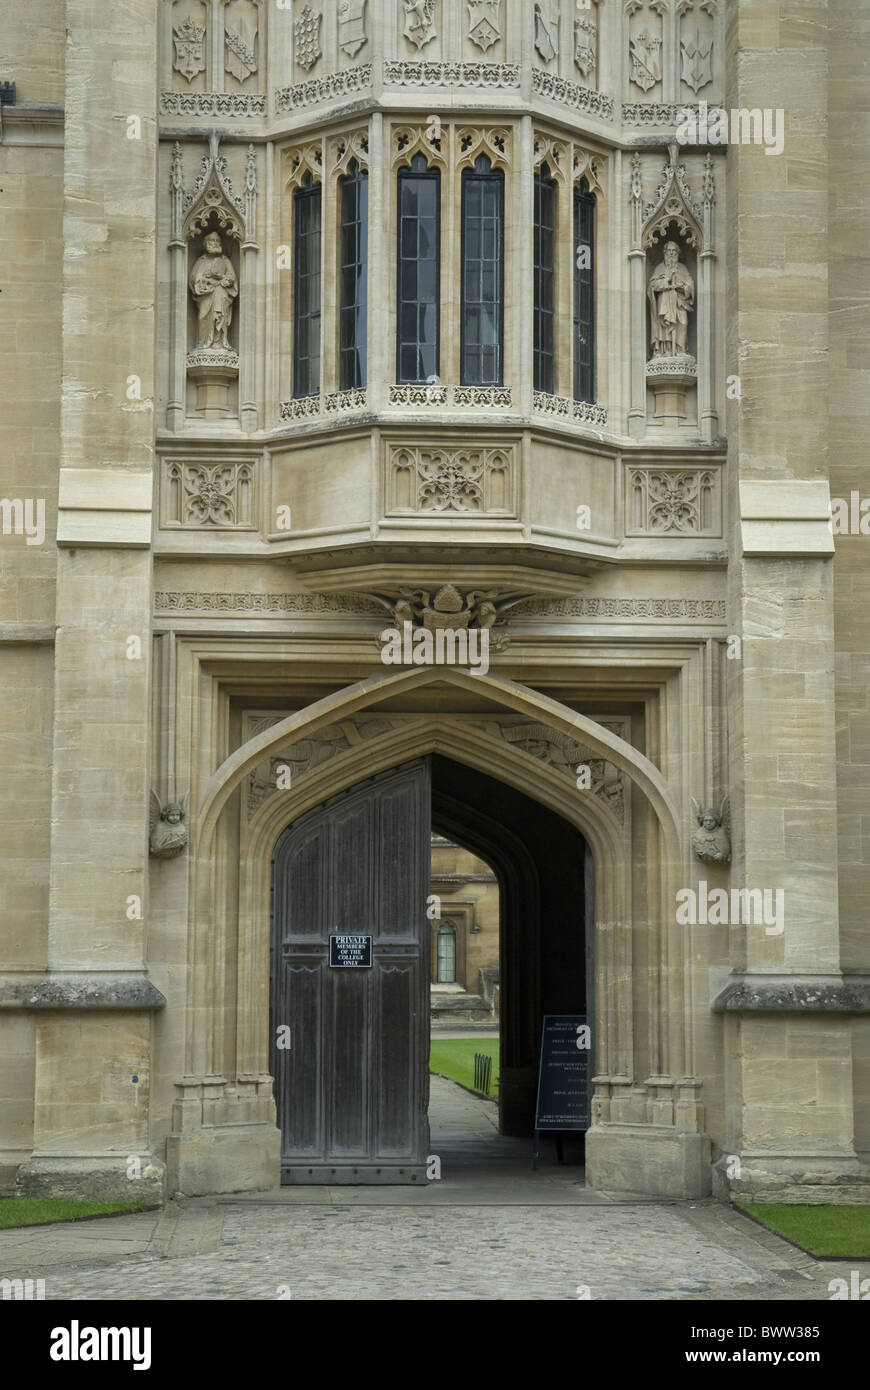 Doorway Quadrangle Magdalen College Oxford University UK britain british english england country scenic scenics scenery europe Stock Photo